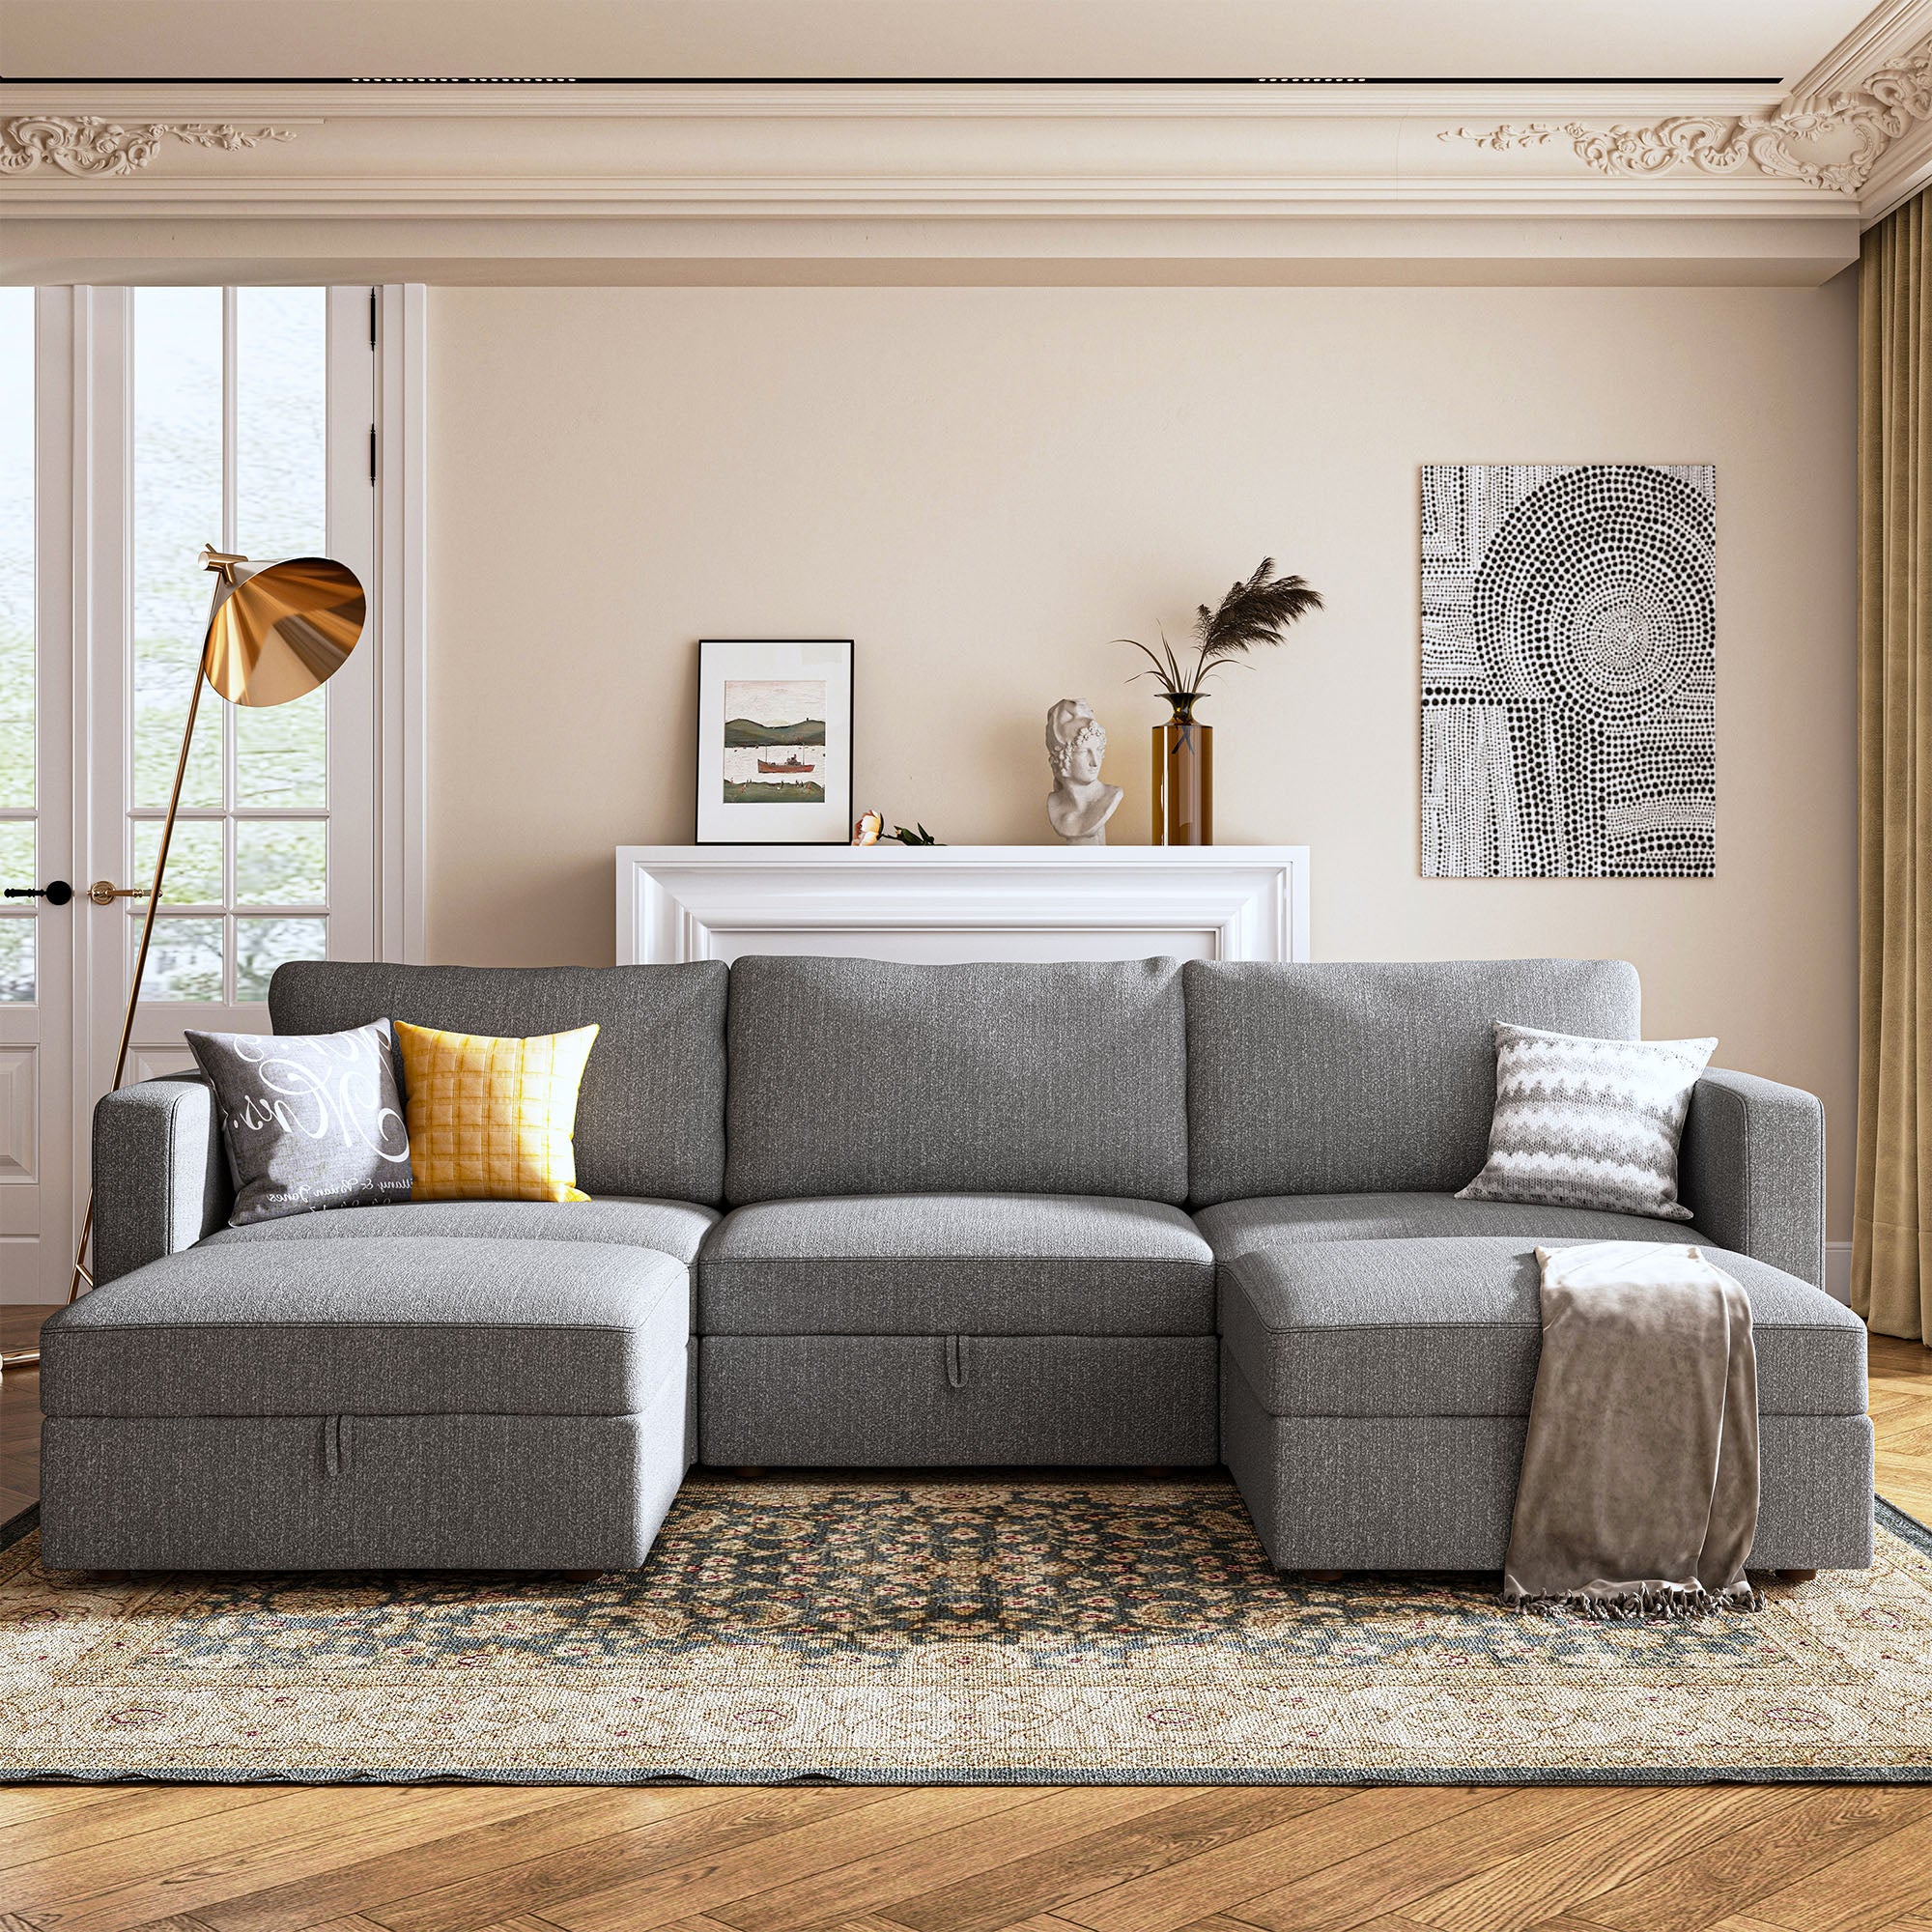 HONBAY Polyester Premuim 3 Seaters U-shaped Modular Sectional Sofa for Living Room